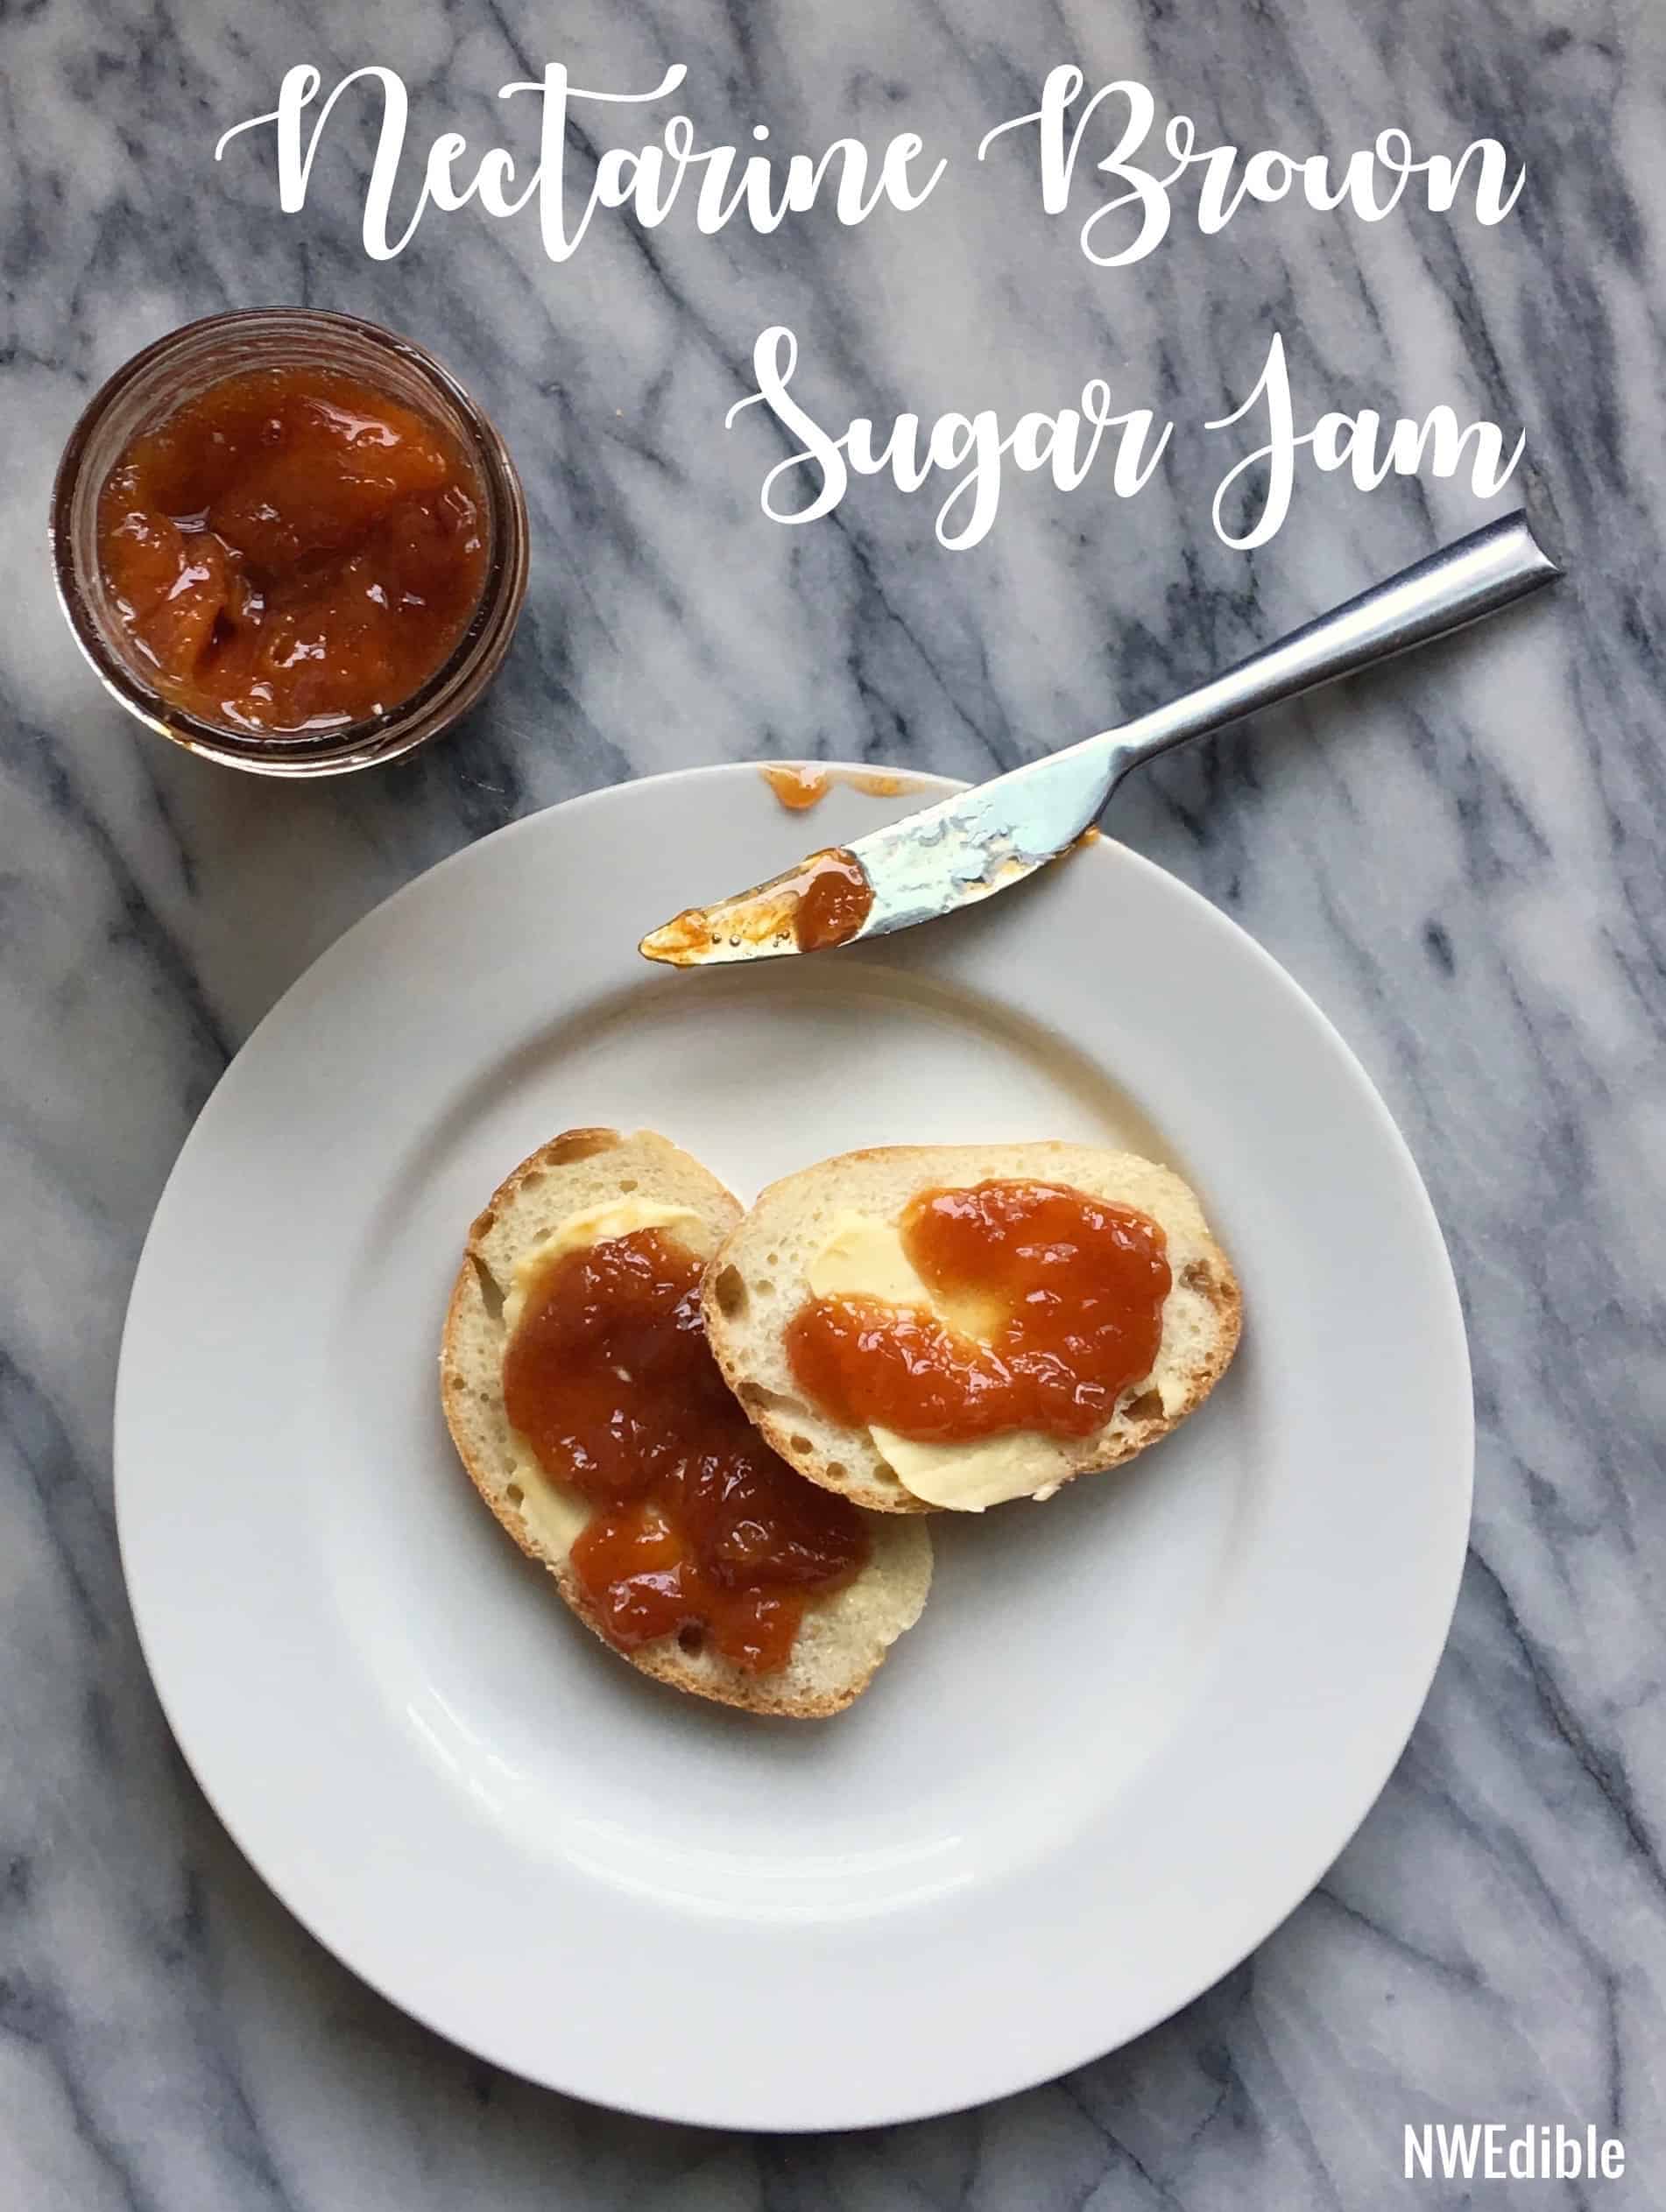 Nectarine Brown Sugar Jam Recipe